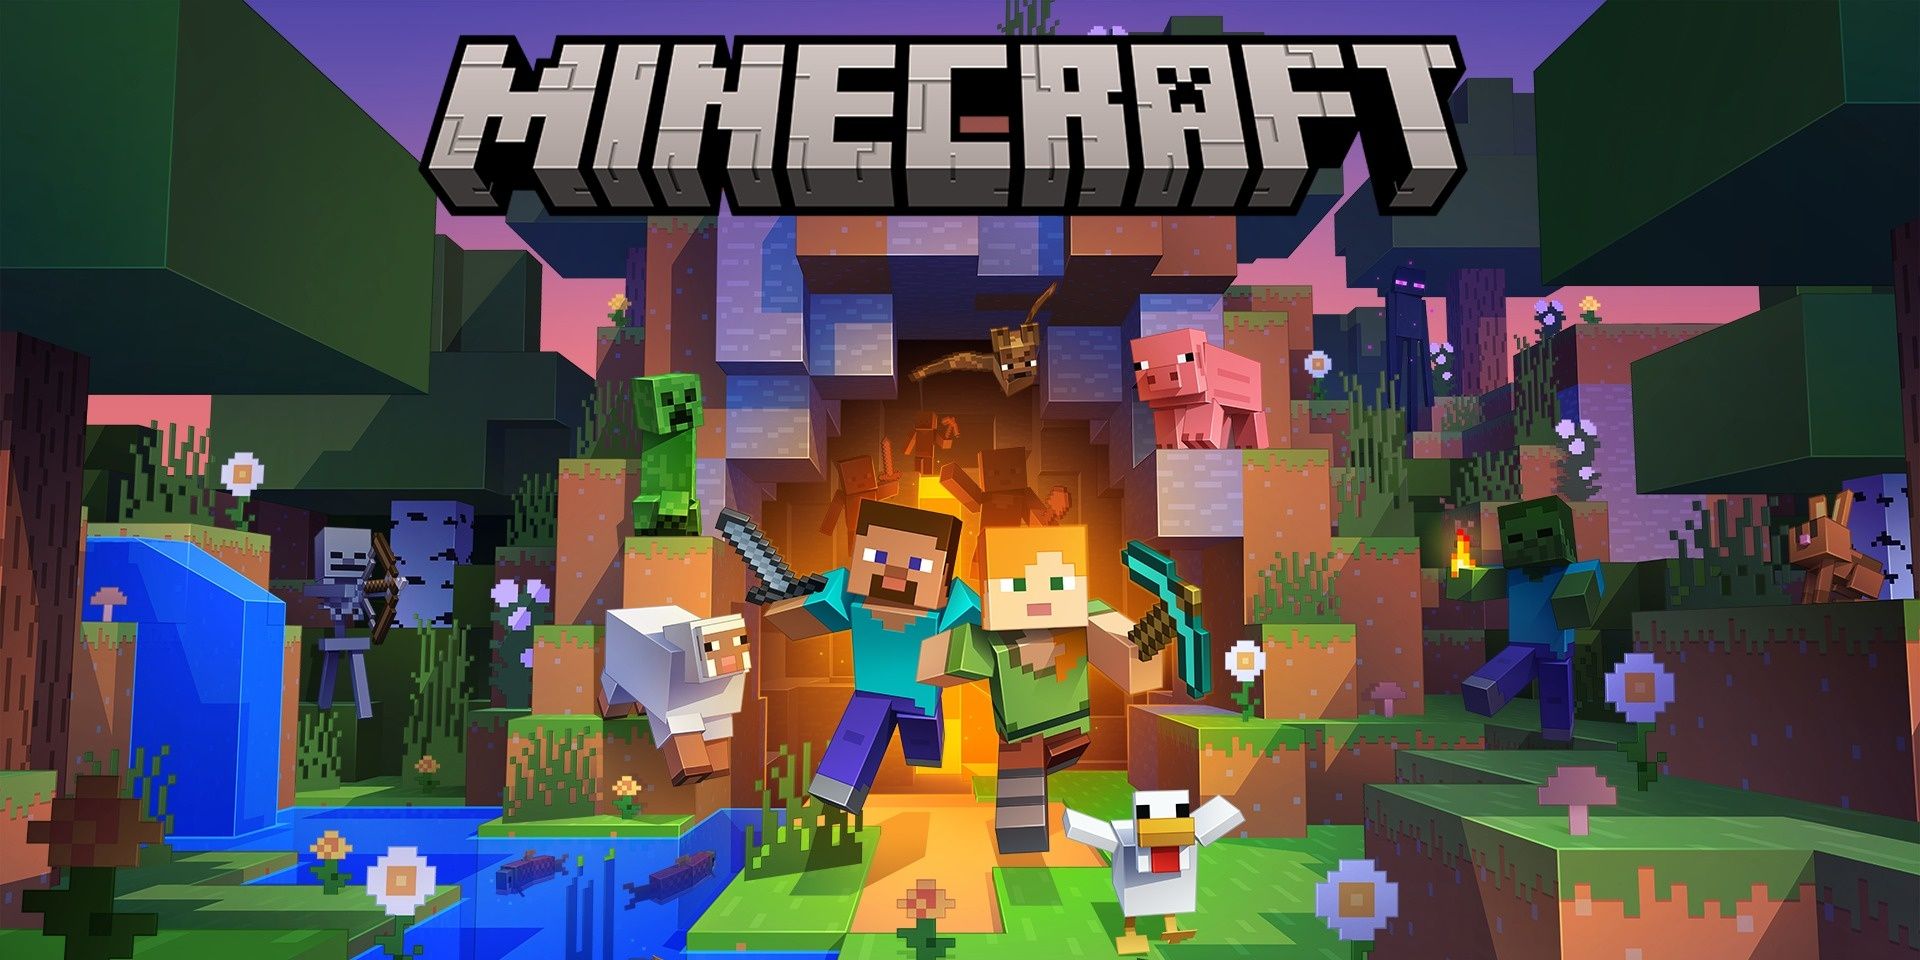 Minecraft cover art